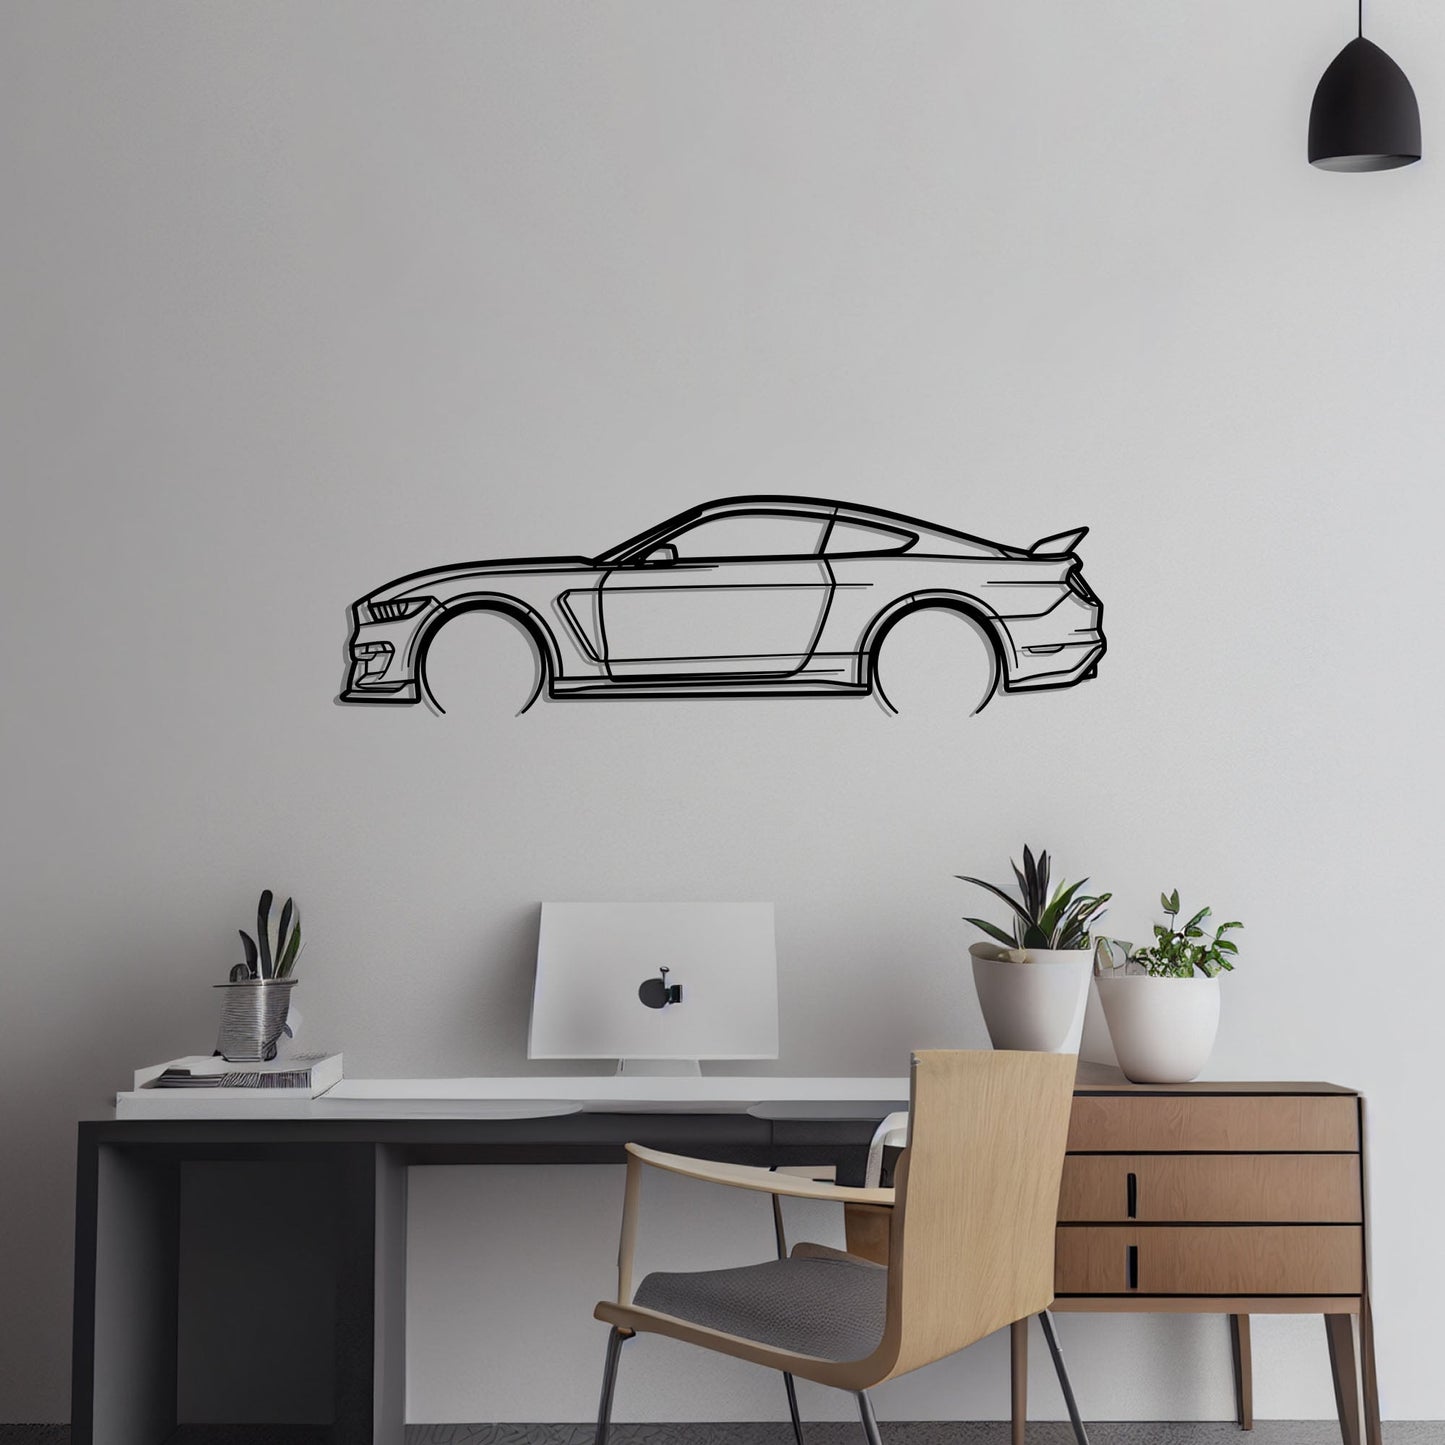 2018 Ford Mustang GT 5.0 Metal Silhouette Metal Wall Art